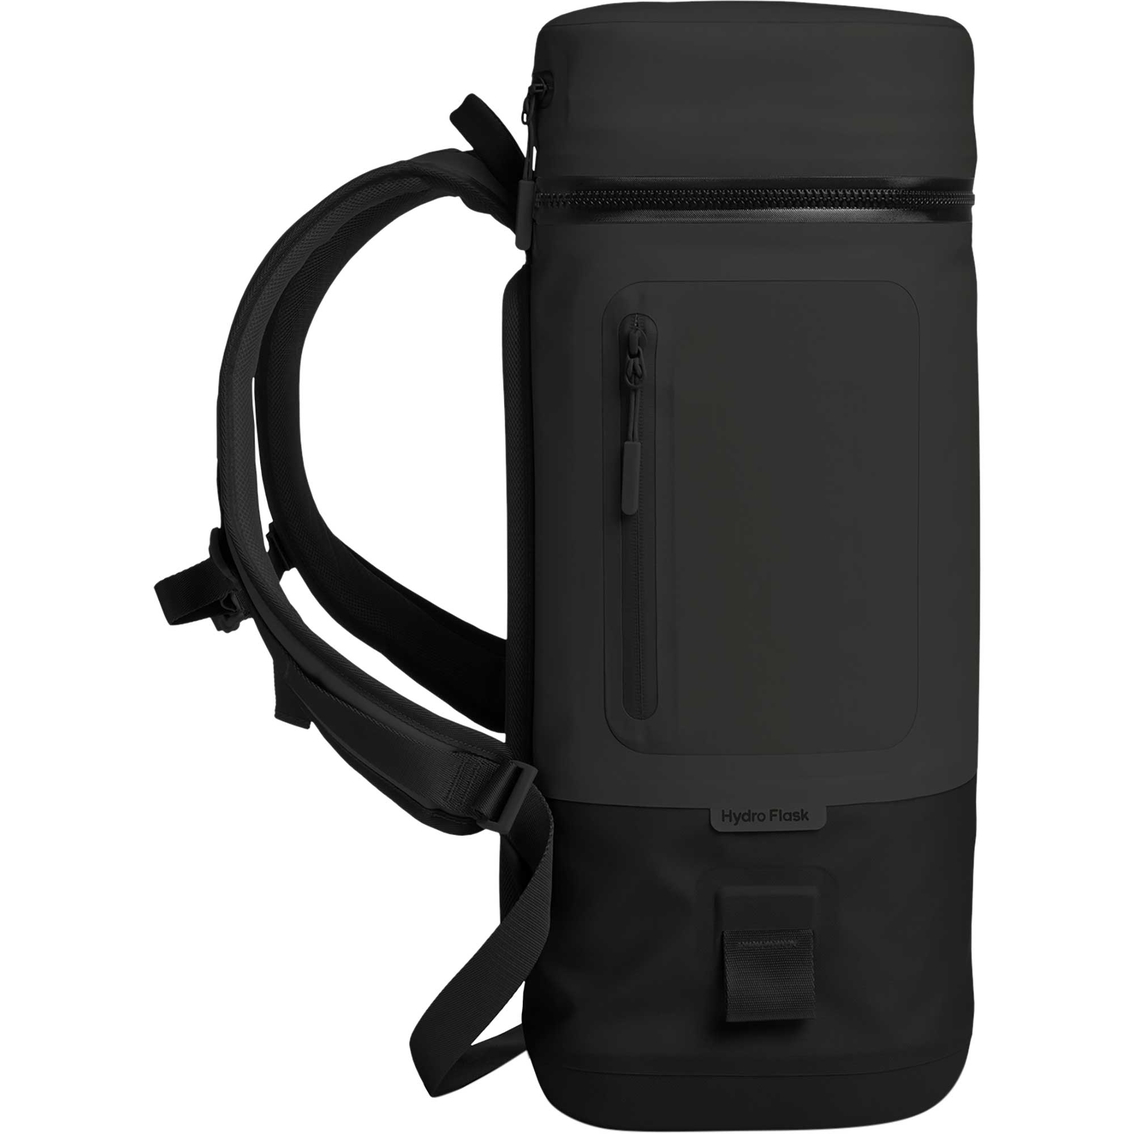 Hydro Flask Unbound 22L Soft Cooler Pack